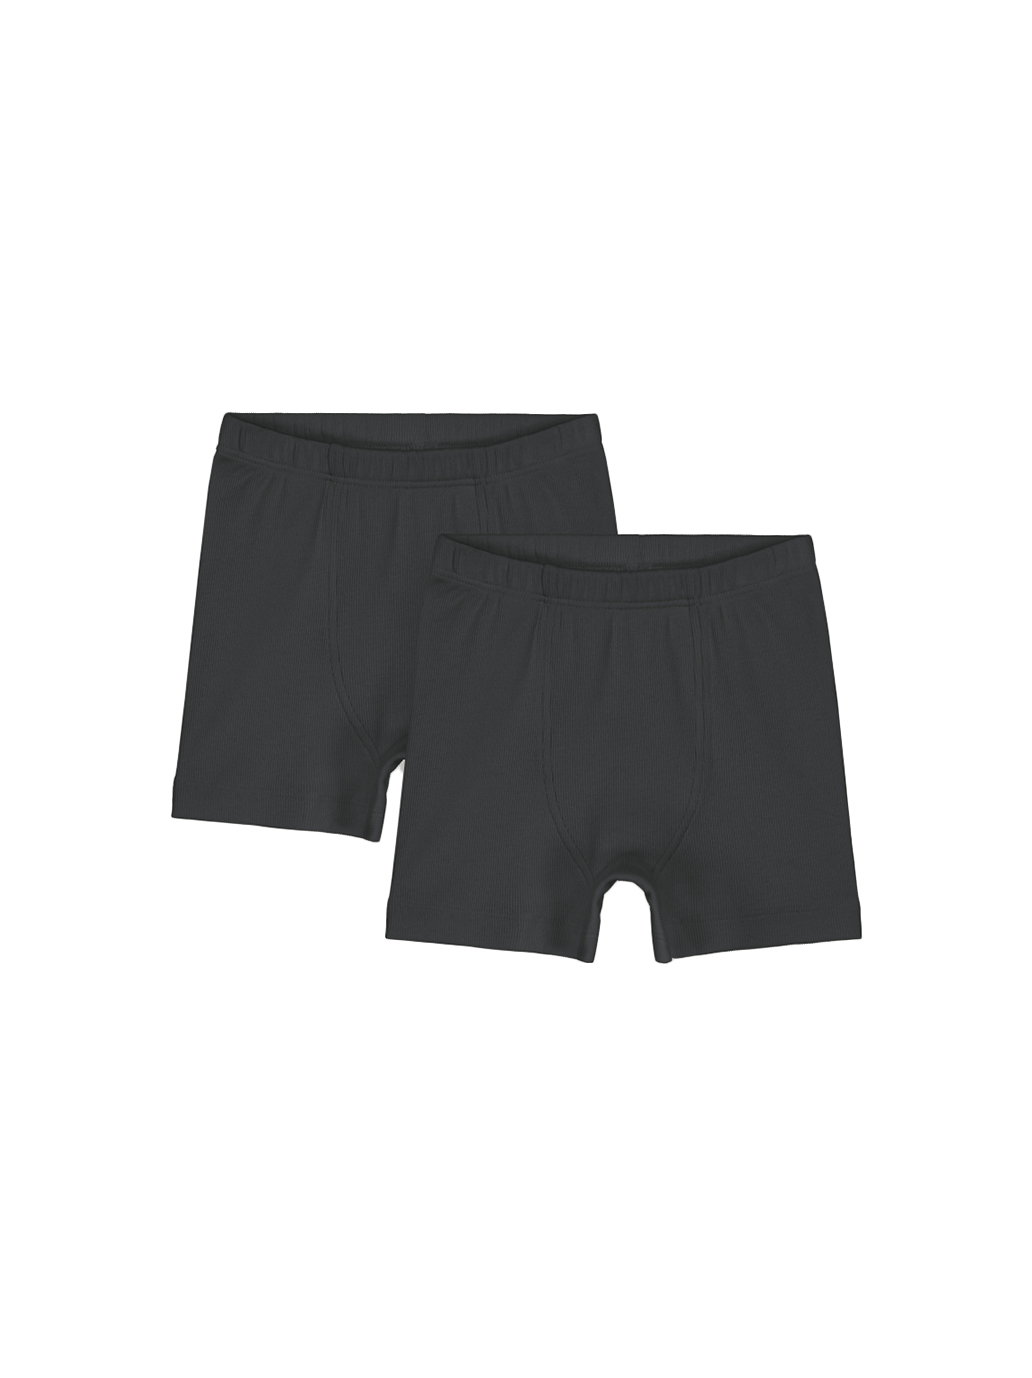 2-pack boys boxer shorts UNDIES